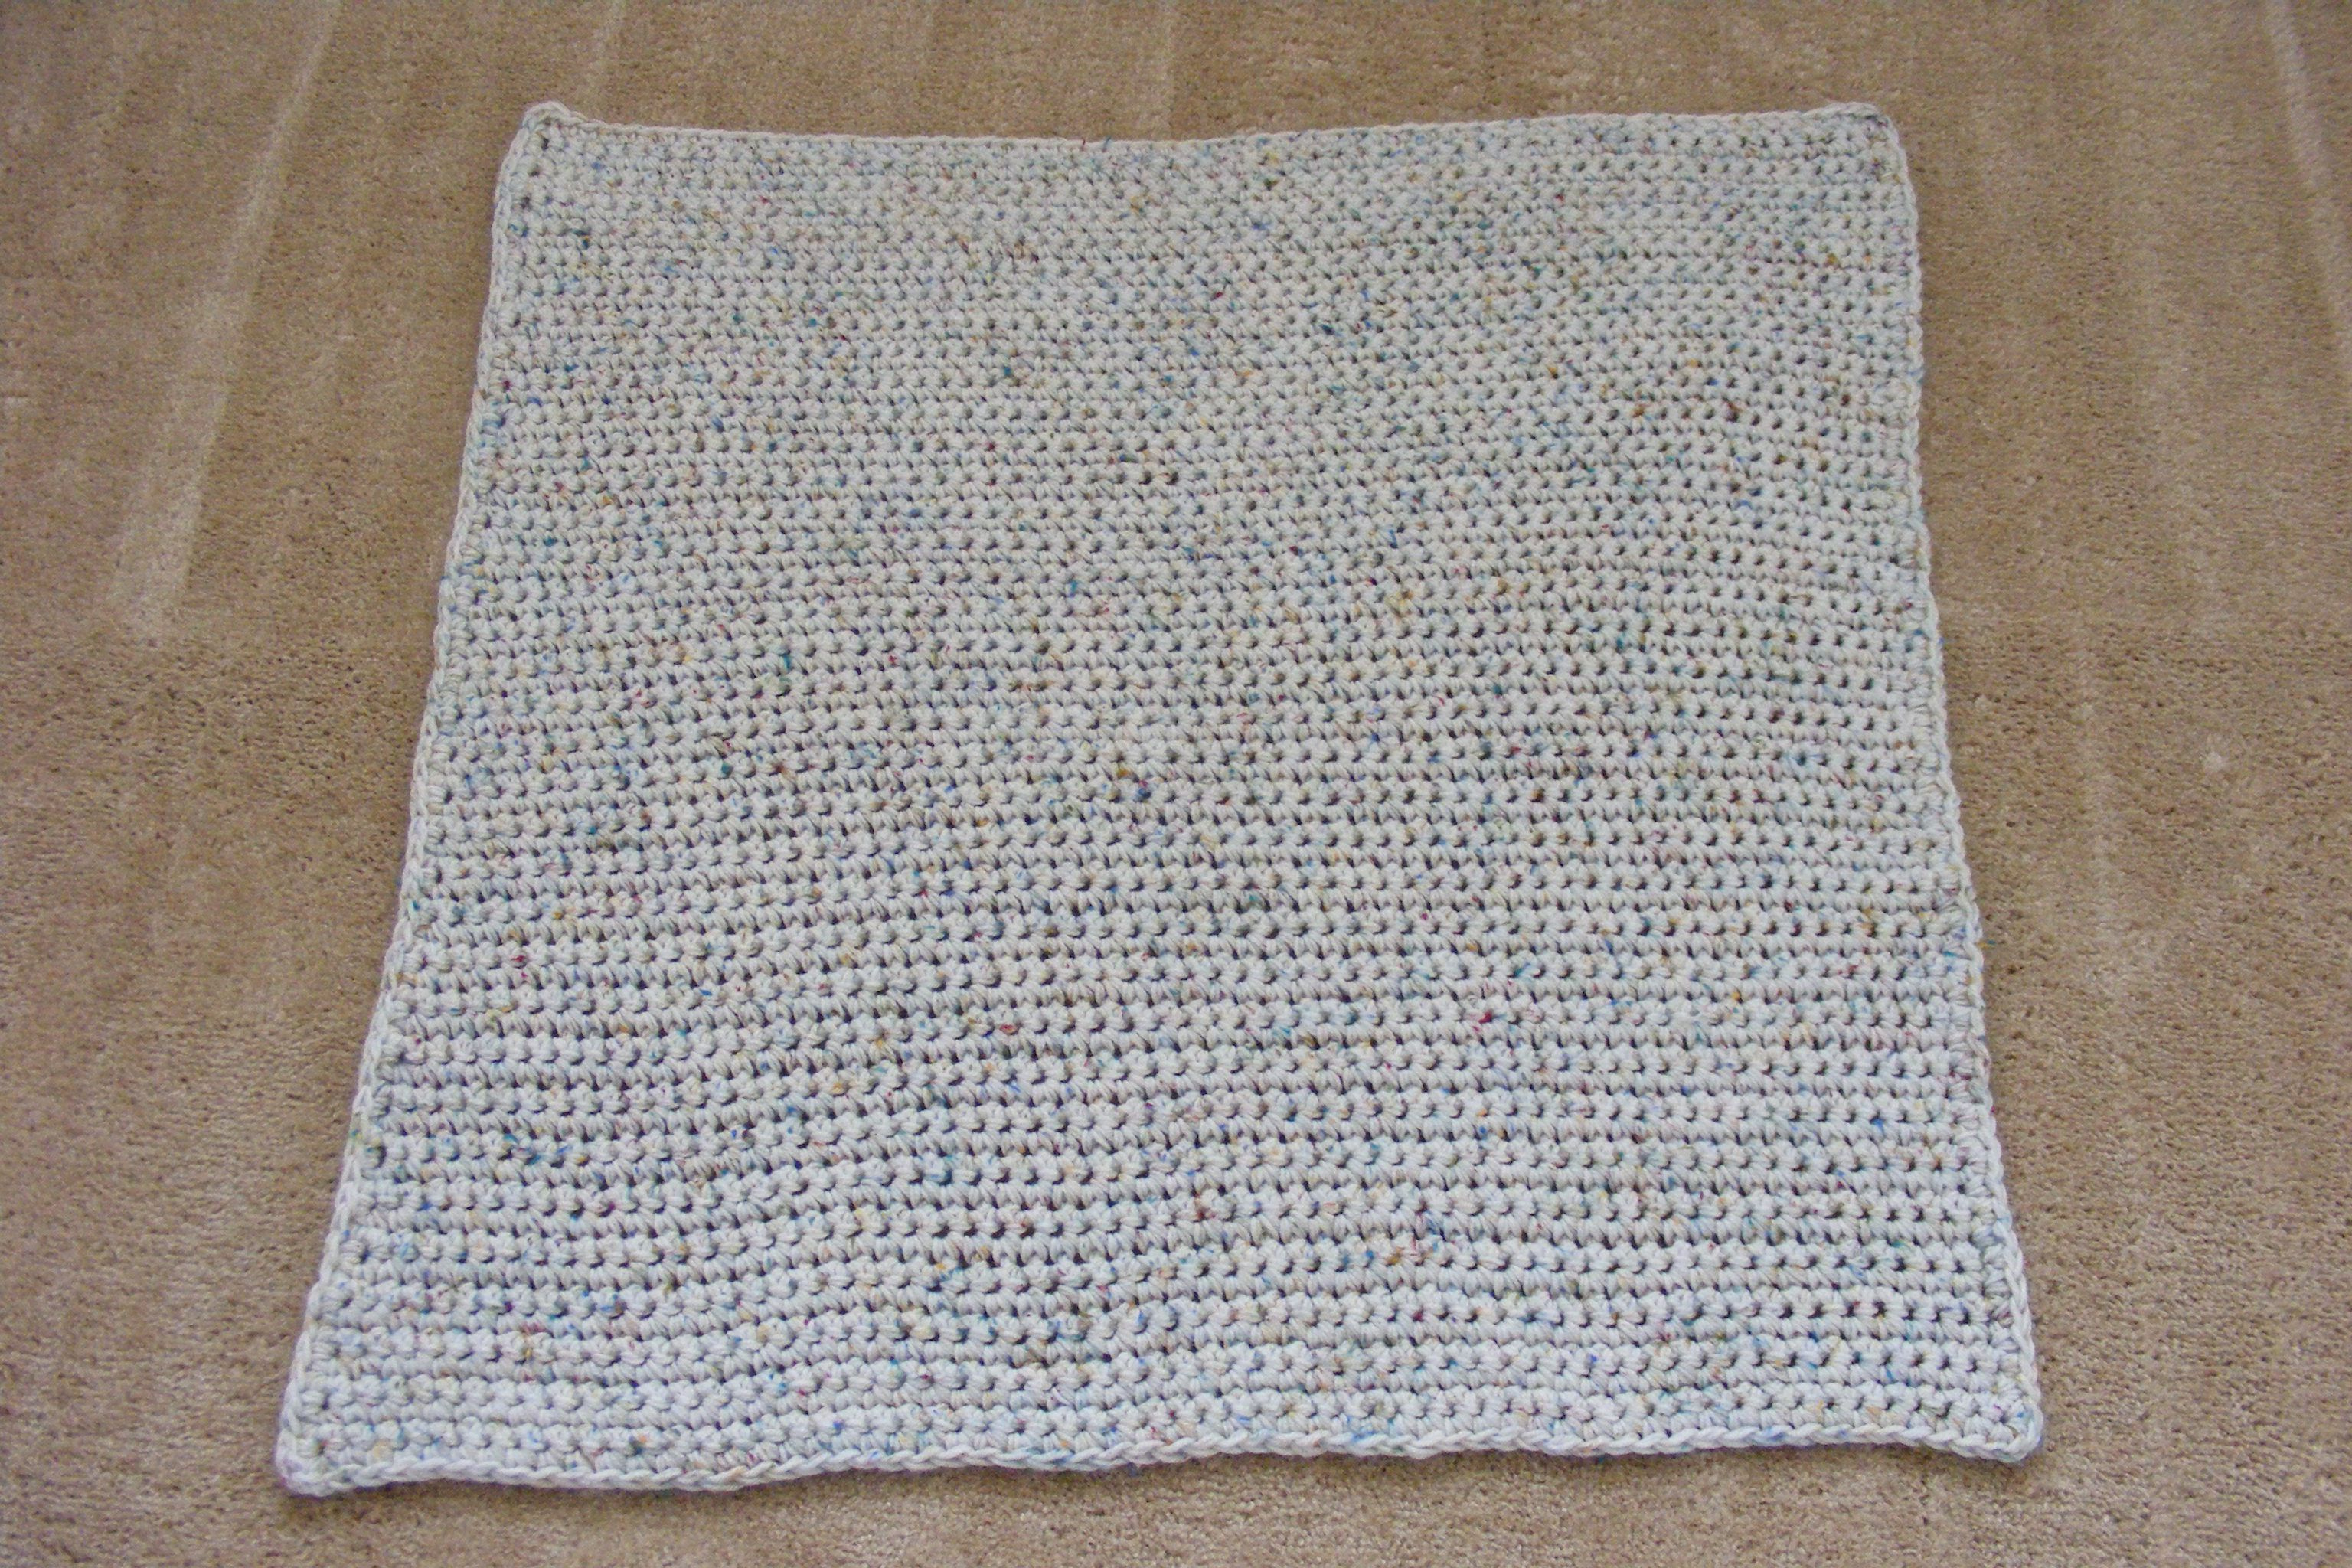 Knitting Afghan Patterns Free 15 Adorable Crochet Ba Blanket Patterns